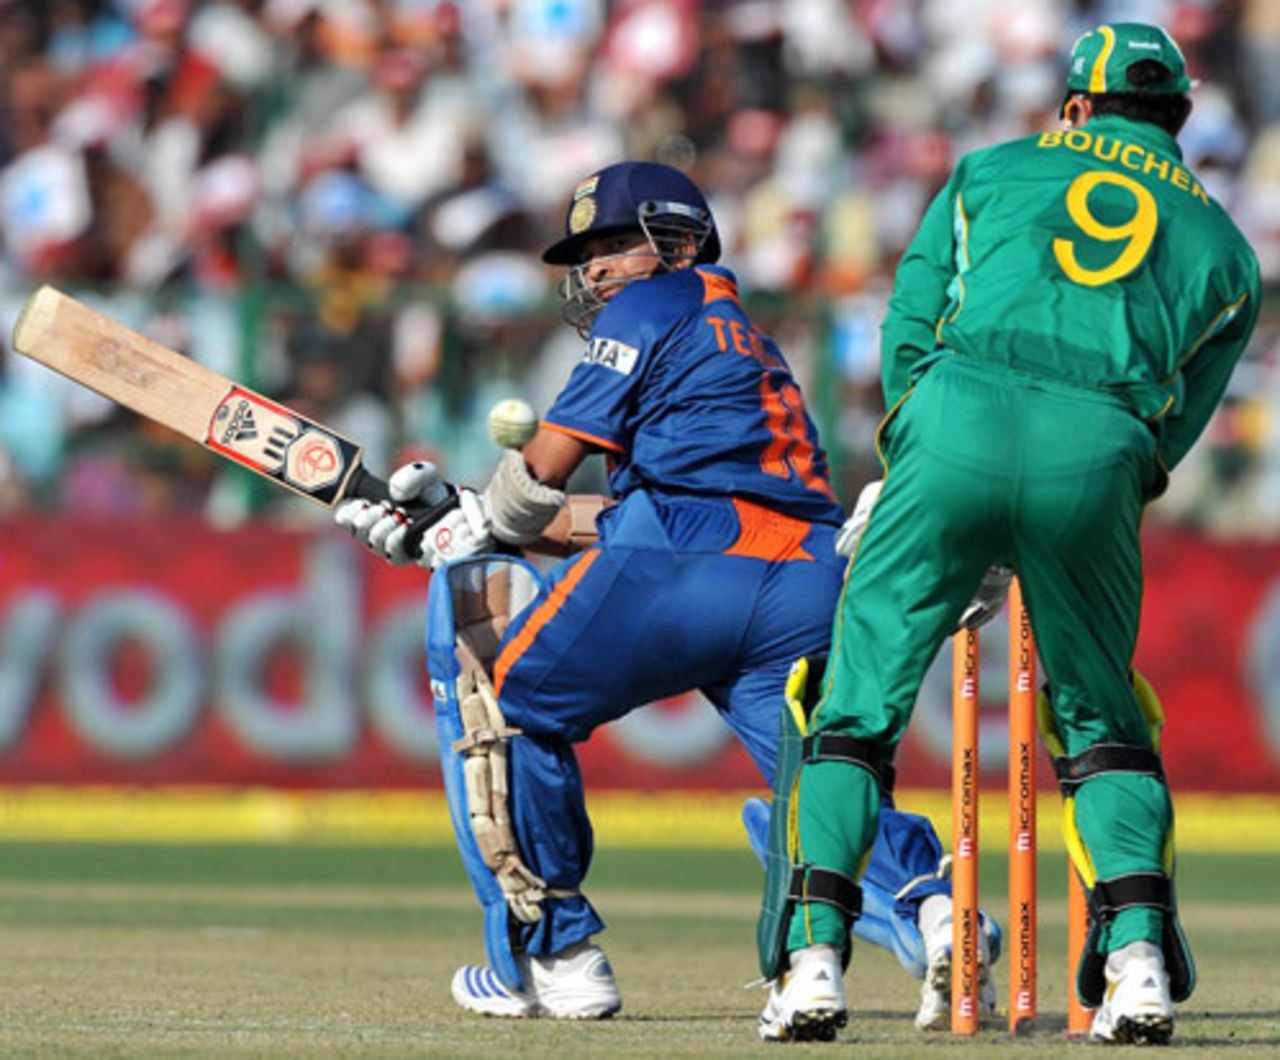 Sachin Tendulkar's paddle-sweep evades Mark Boucher's gloves, 2nd ODI, Gwalior, February 24, 2010